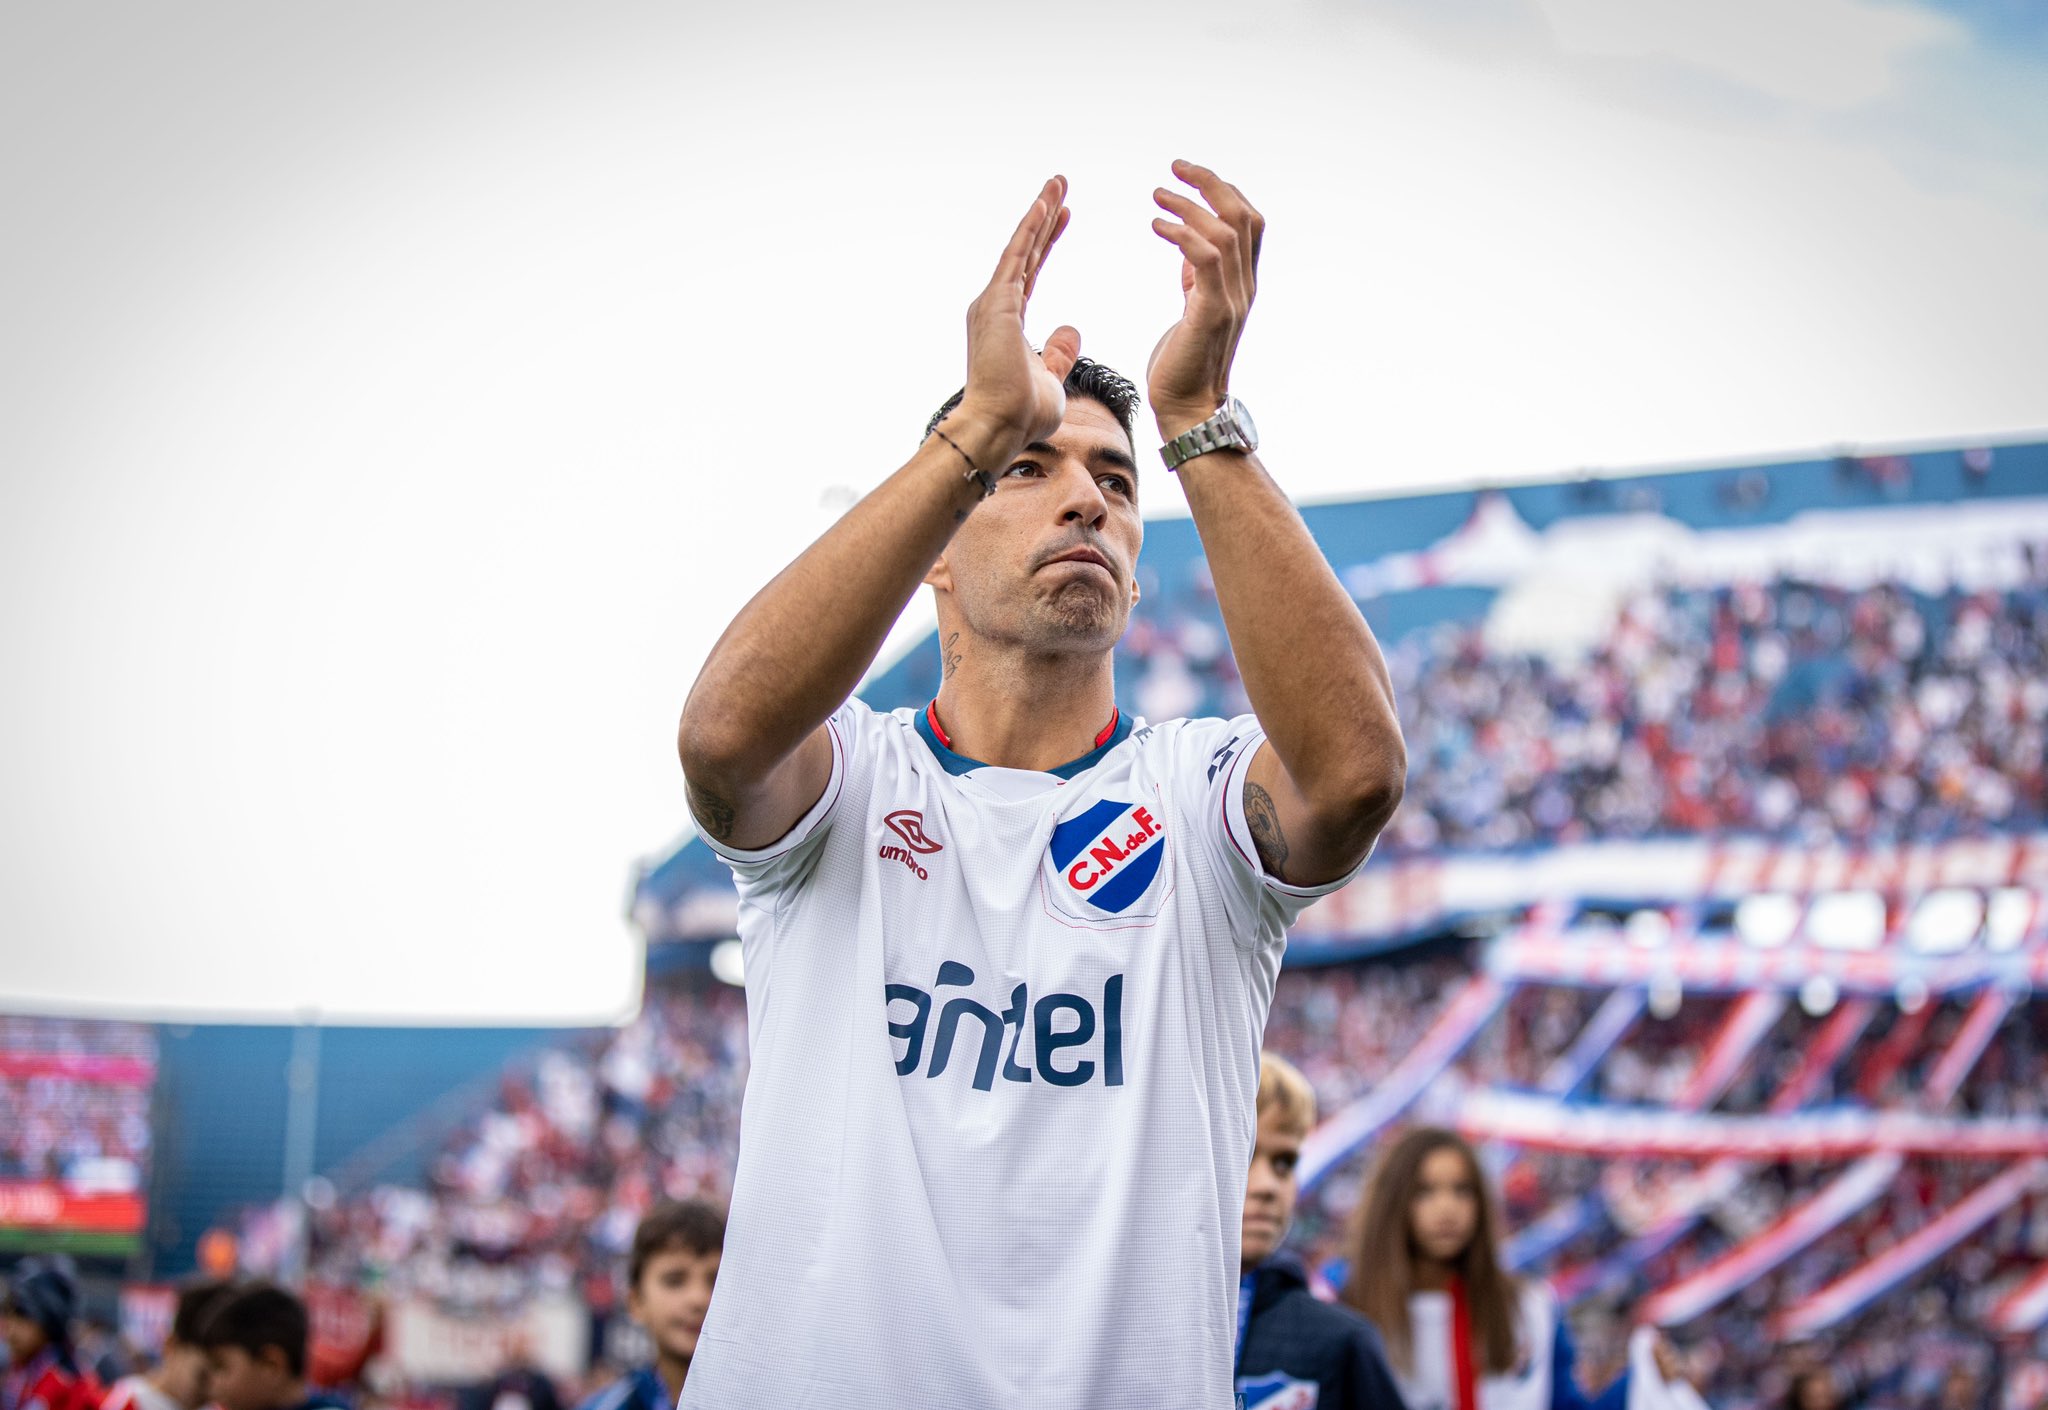 Luis Suárez close to Nacional return - AS USA